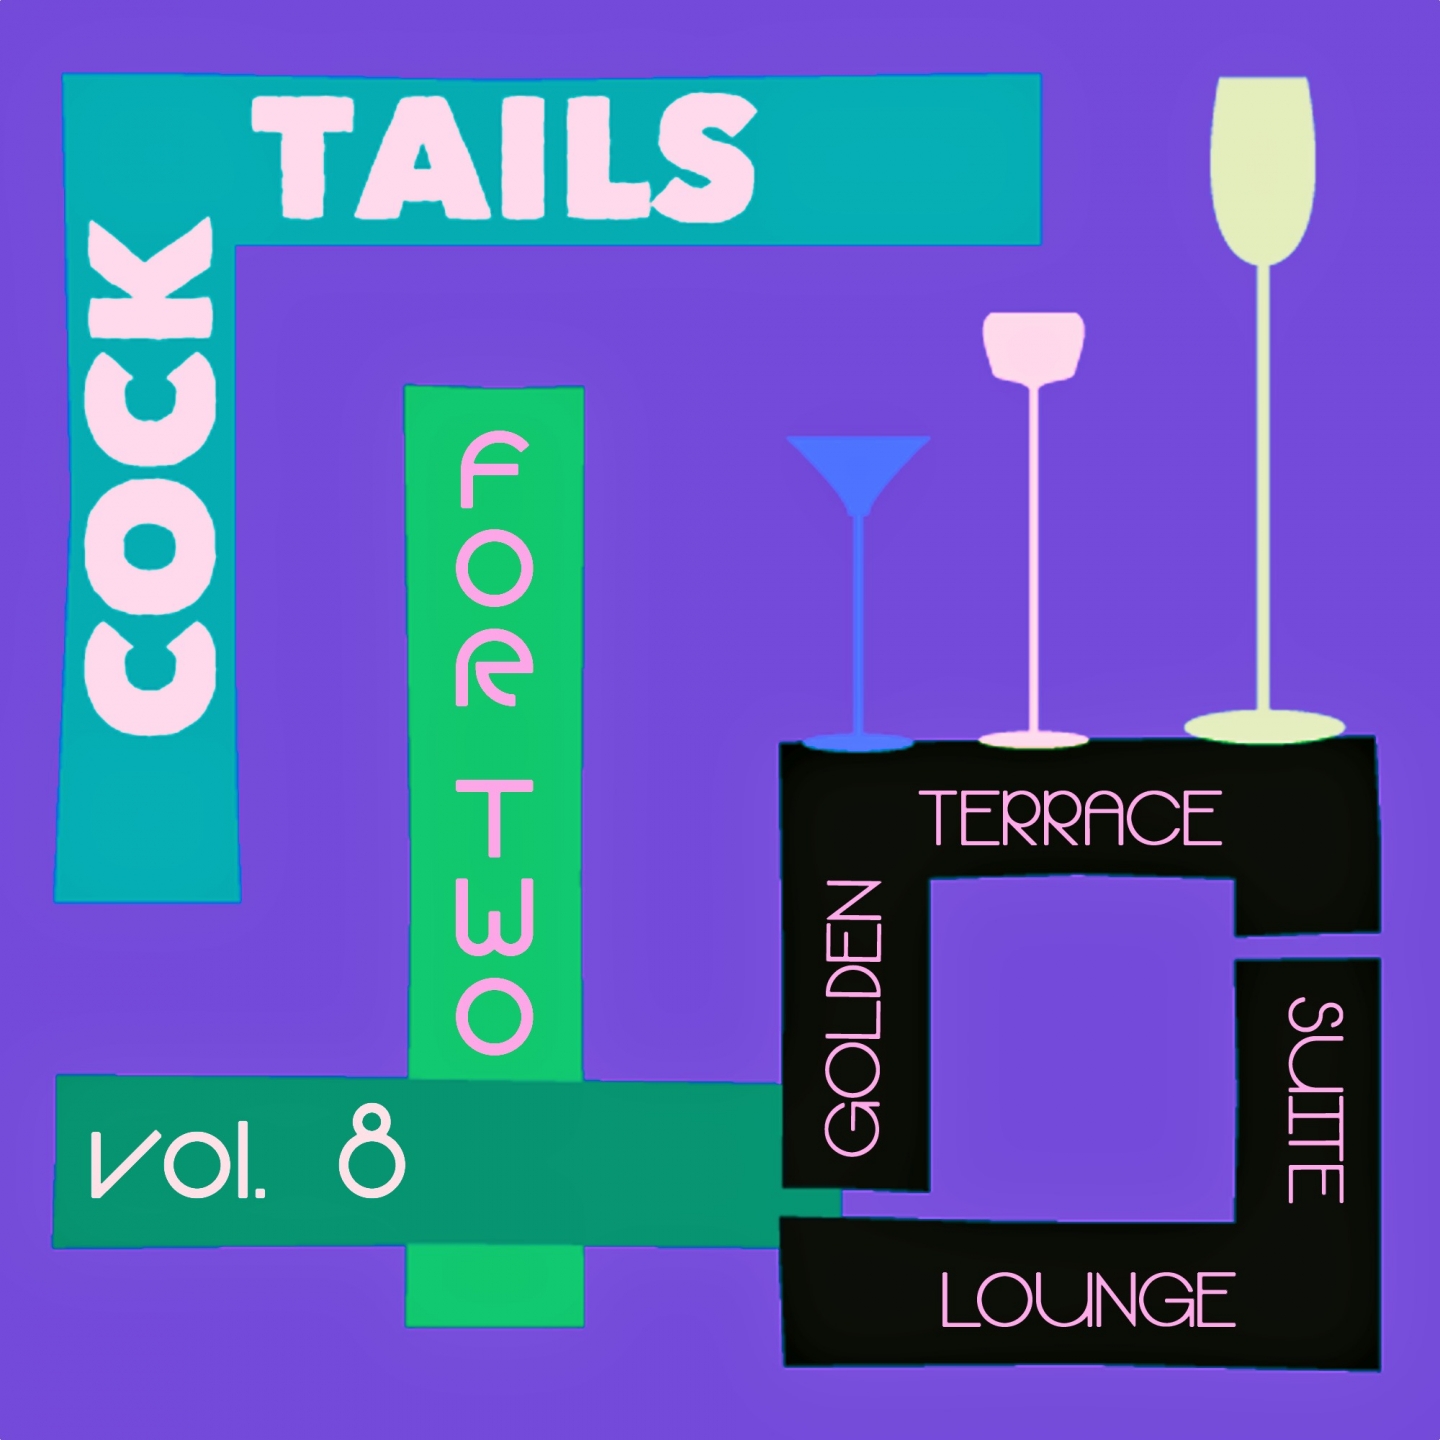 Cocktails for Two, Vol. 8 (Golden Terrace Suite Lounge)